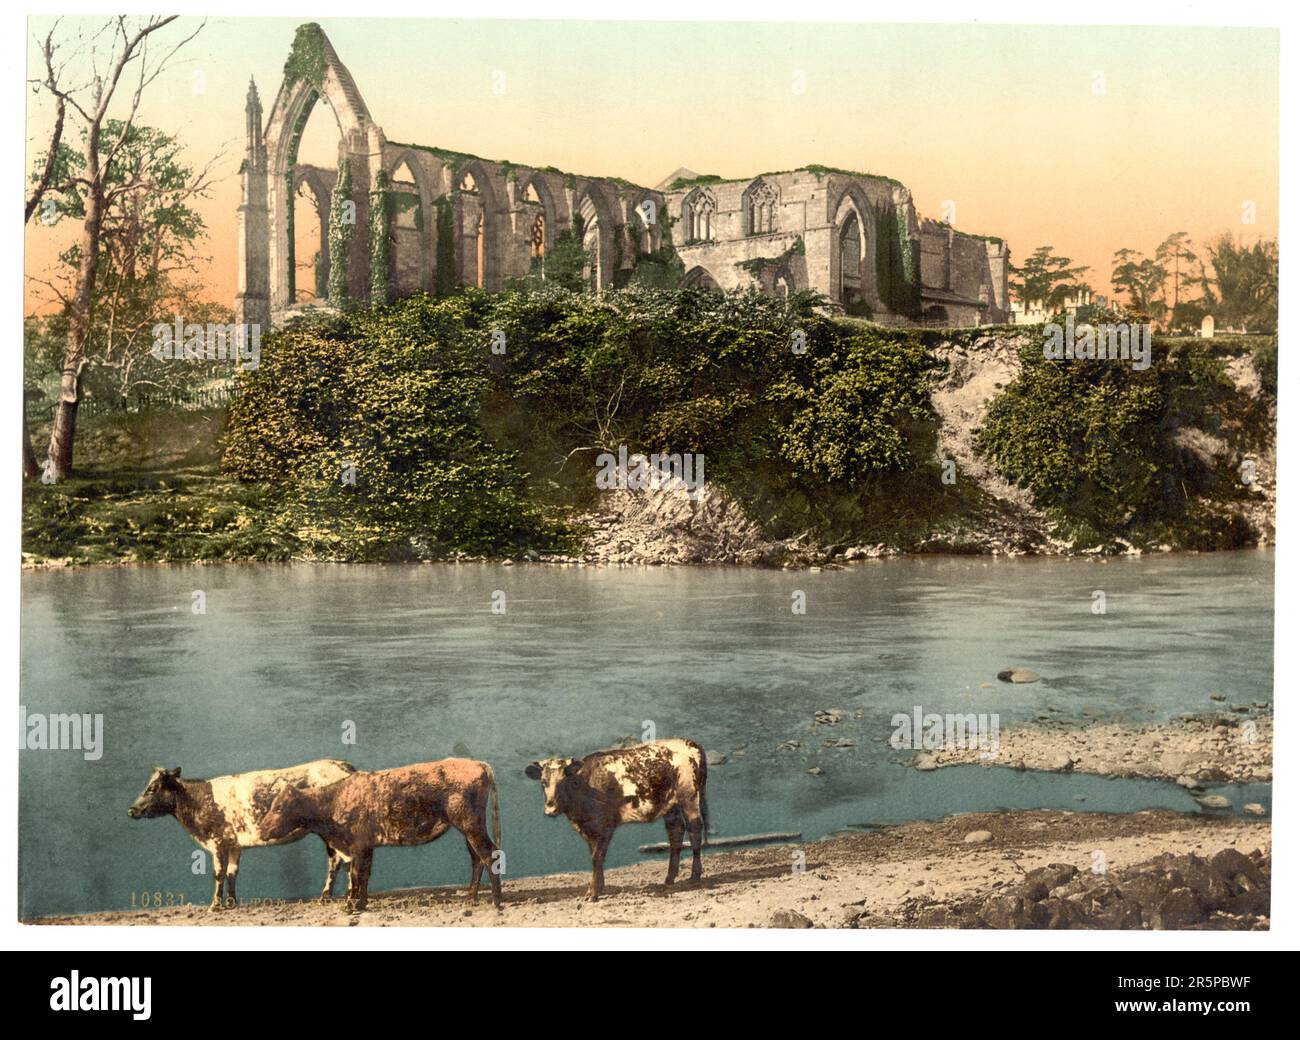 Abbey from the River, Bolton Abbey, England 1 fotomechanischer Druck : Photochrom, Farbe. Datum: 1890 Stockfoto